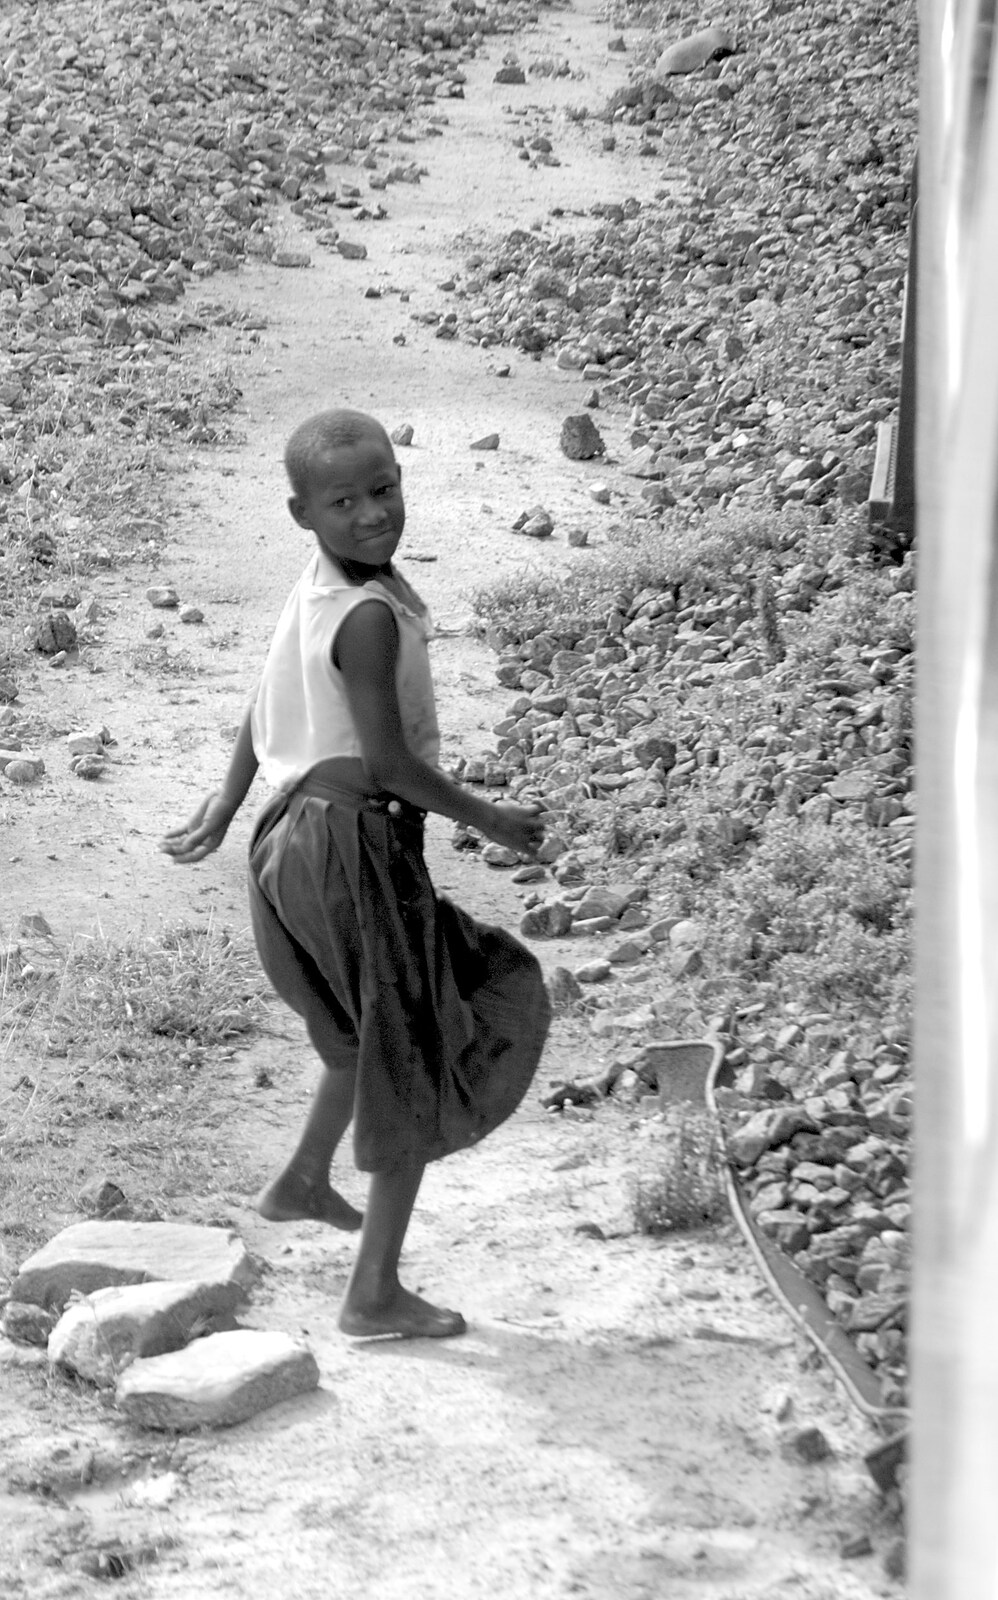 Long Train (not) Runnin': Tiwi Beach, Mombasa, Kenya - 7th November 2010: Another small boy chases the train